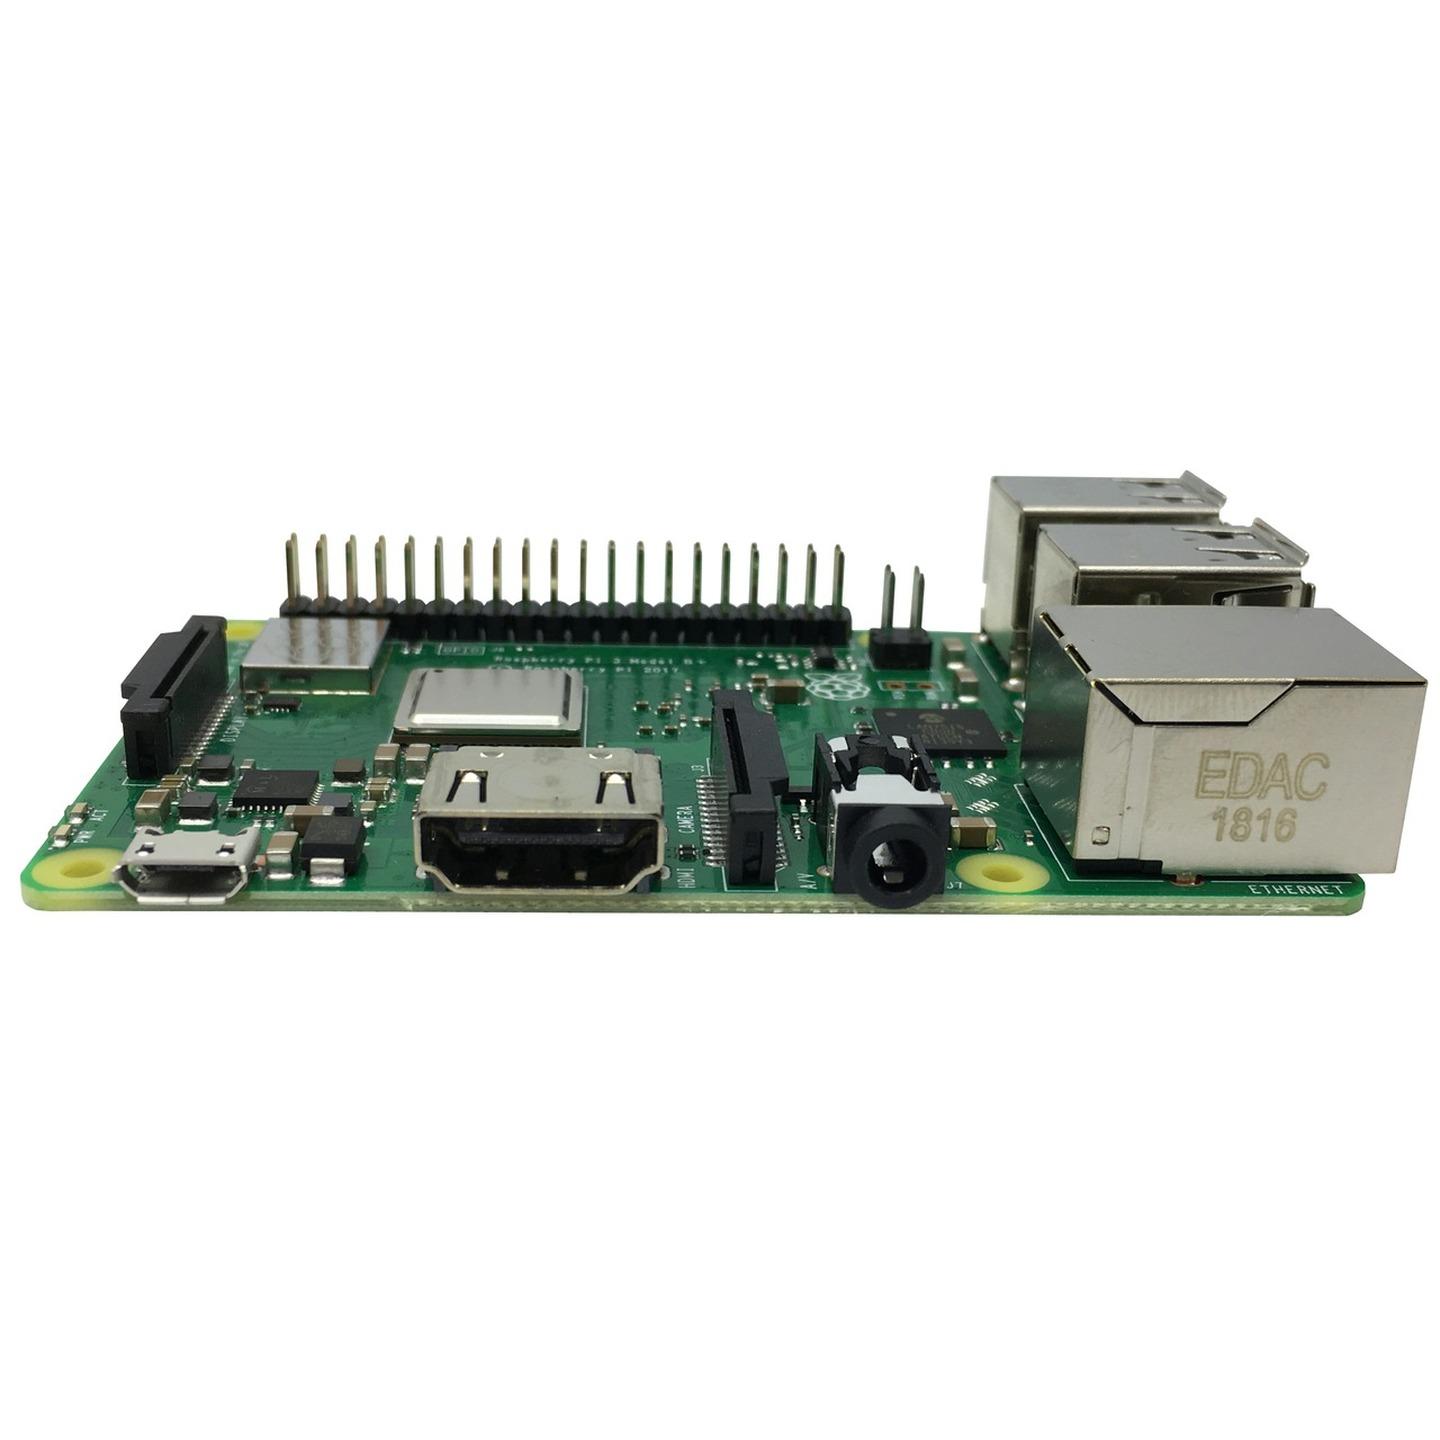 Raspberry Pi 3B Single Board Computer